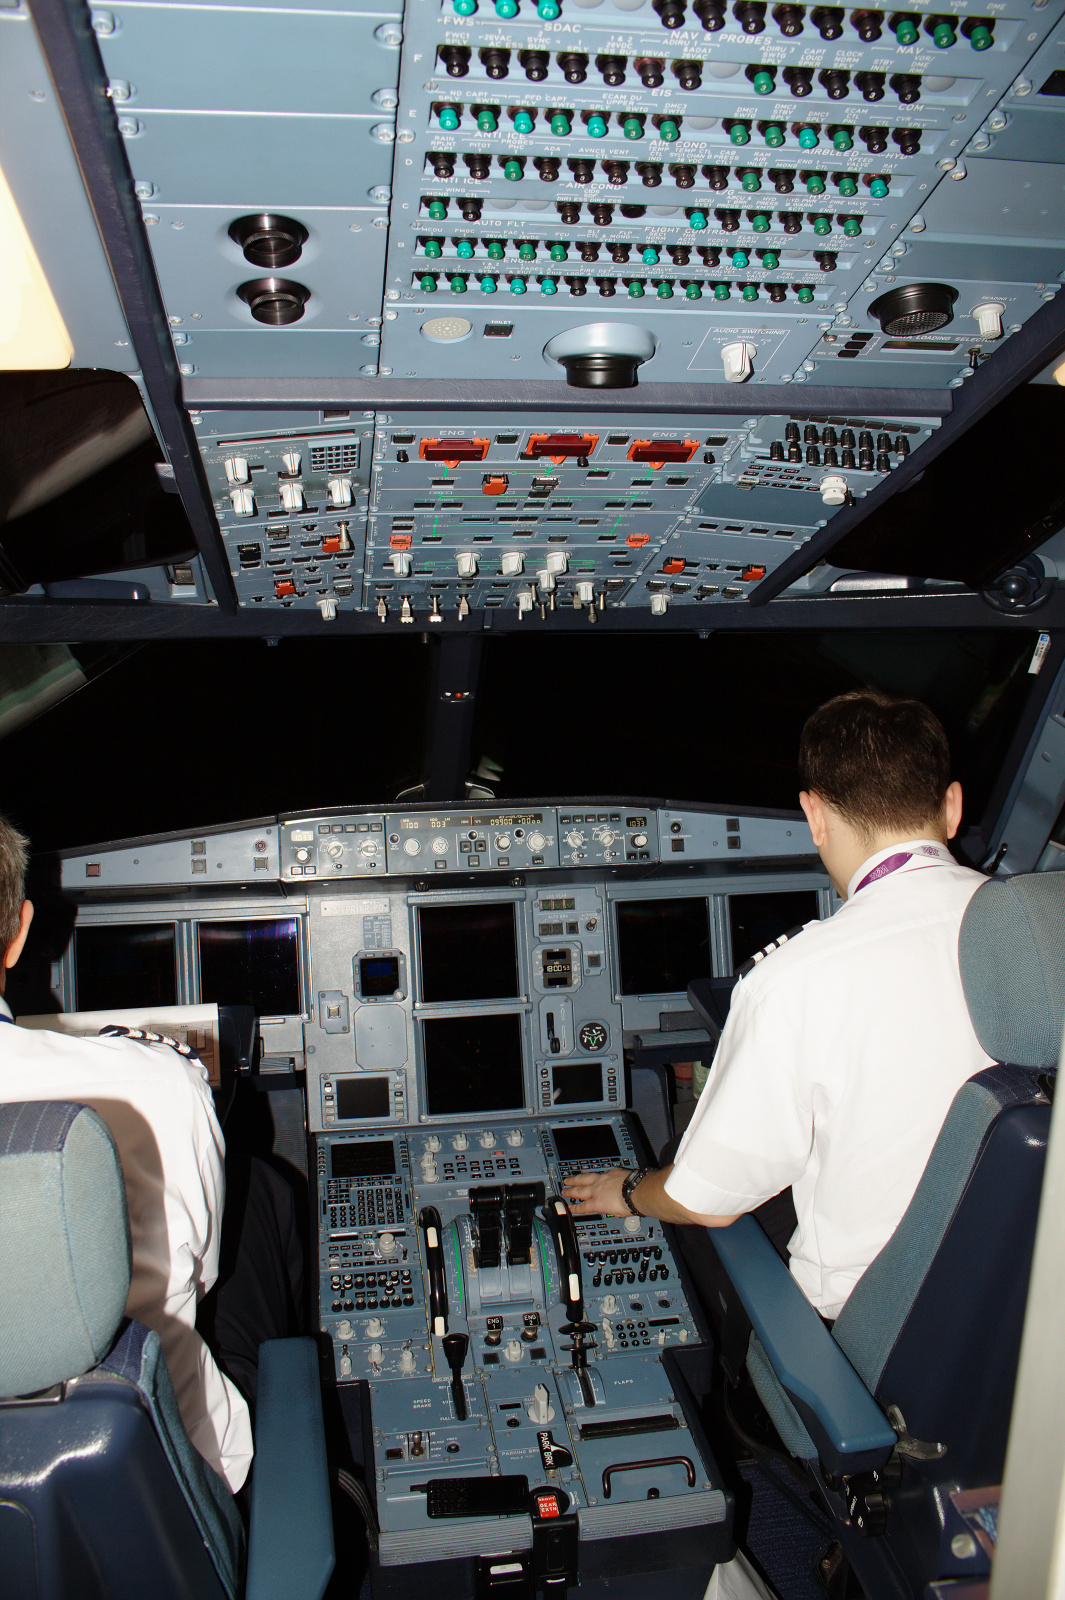 HA-LPR - cockpit (Aircraft » EPWA Spotting » Airbus A320-200 » Wizz Air)